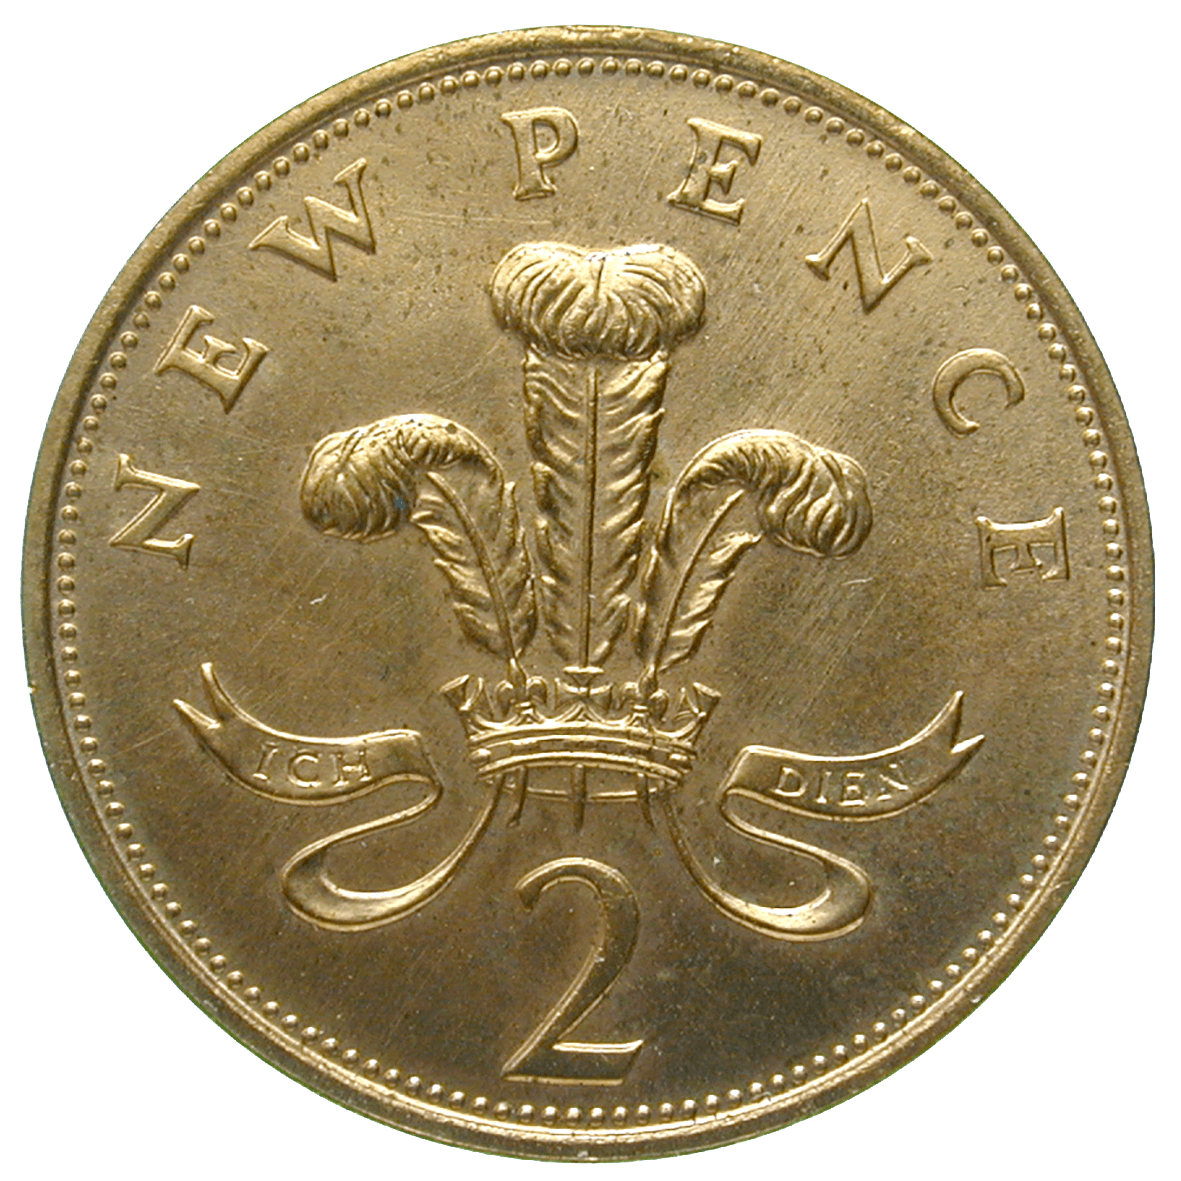 United Kingdom of Great Britain, Elizabeth II, 2 New Pence 1971 (reverse)